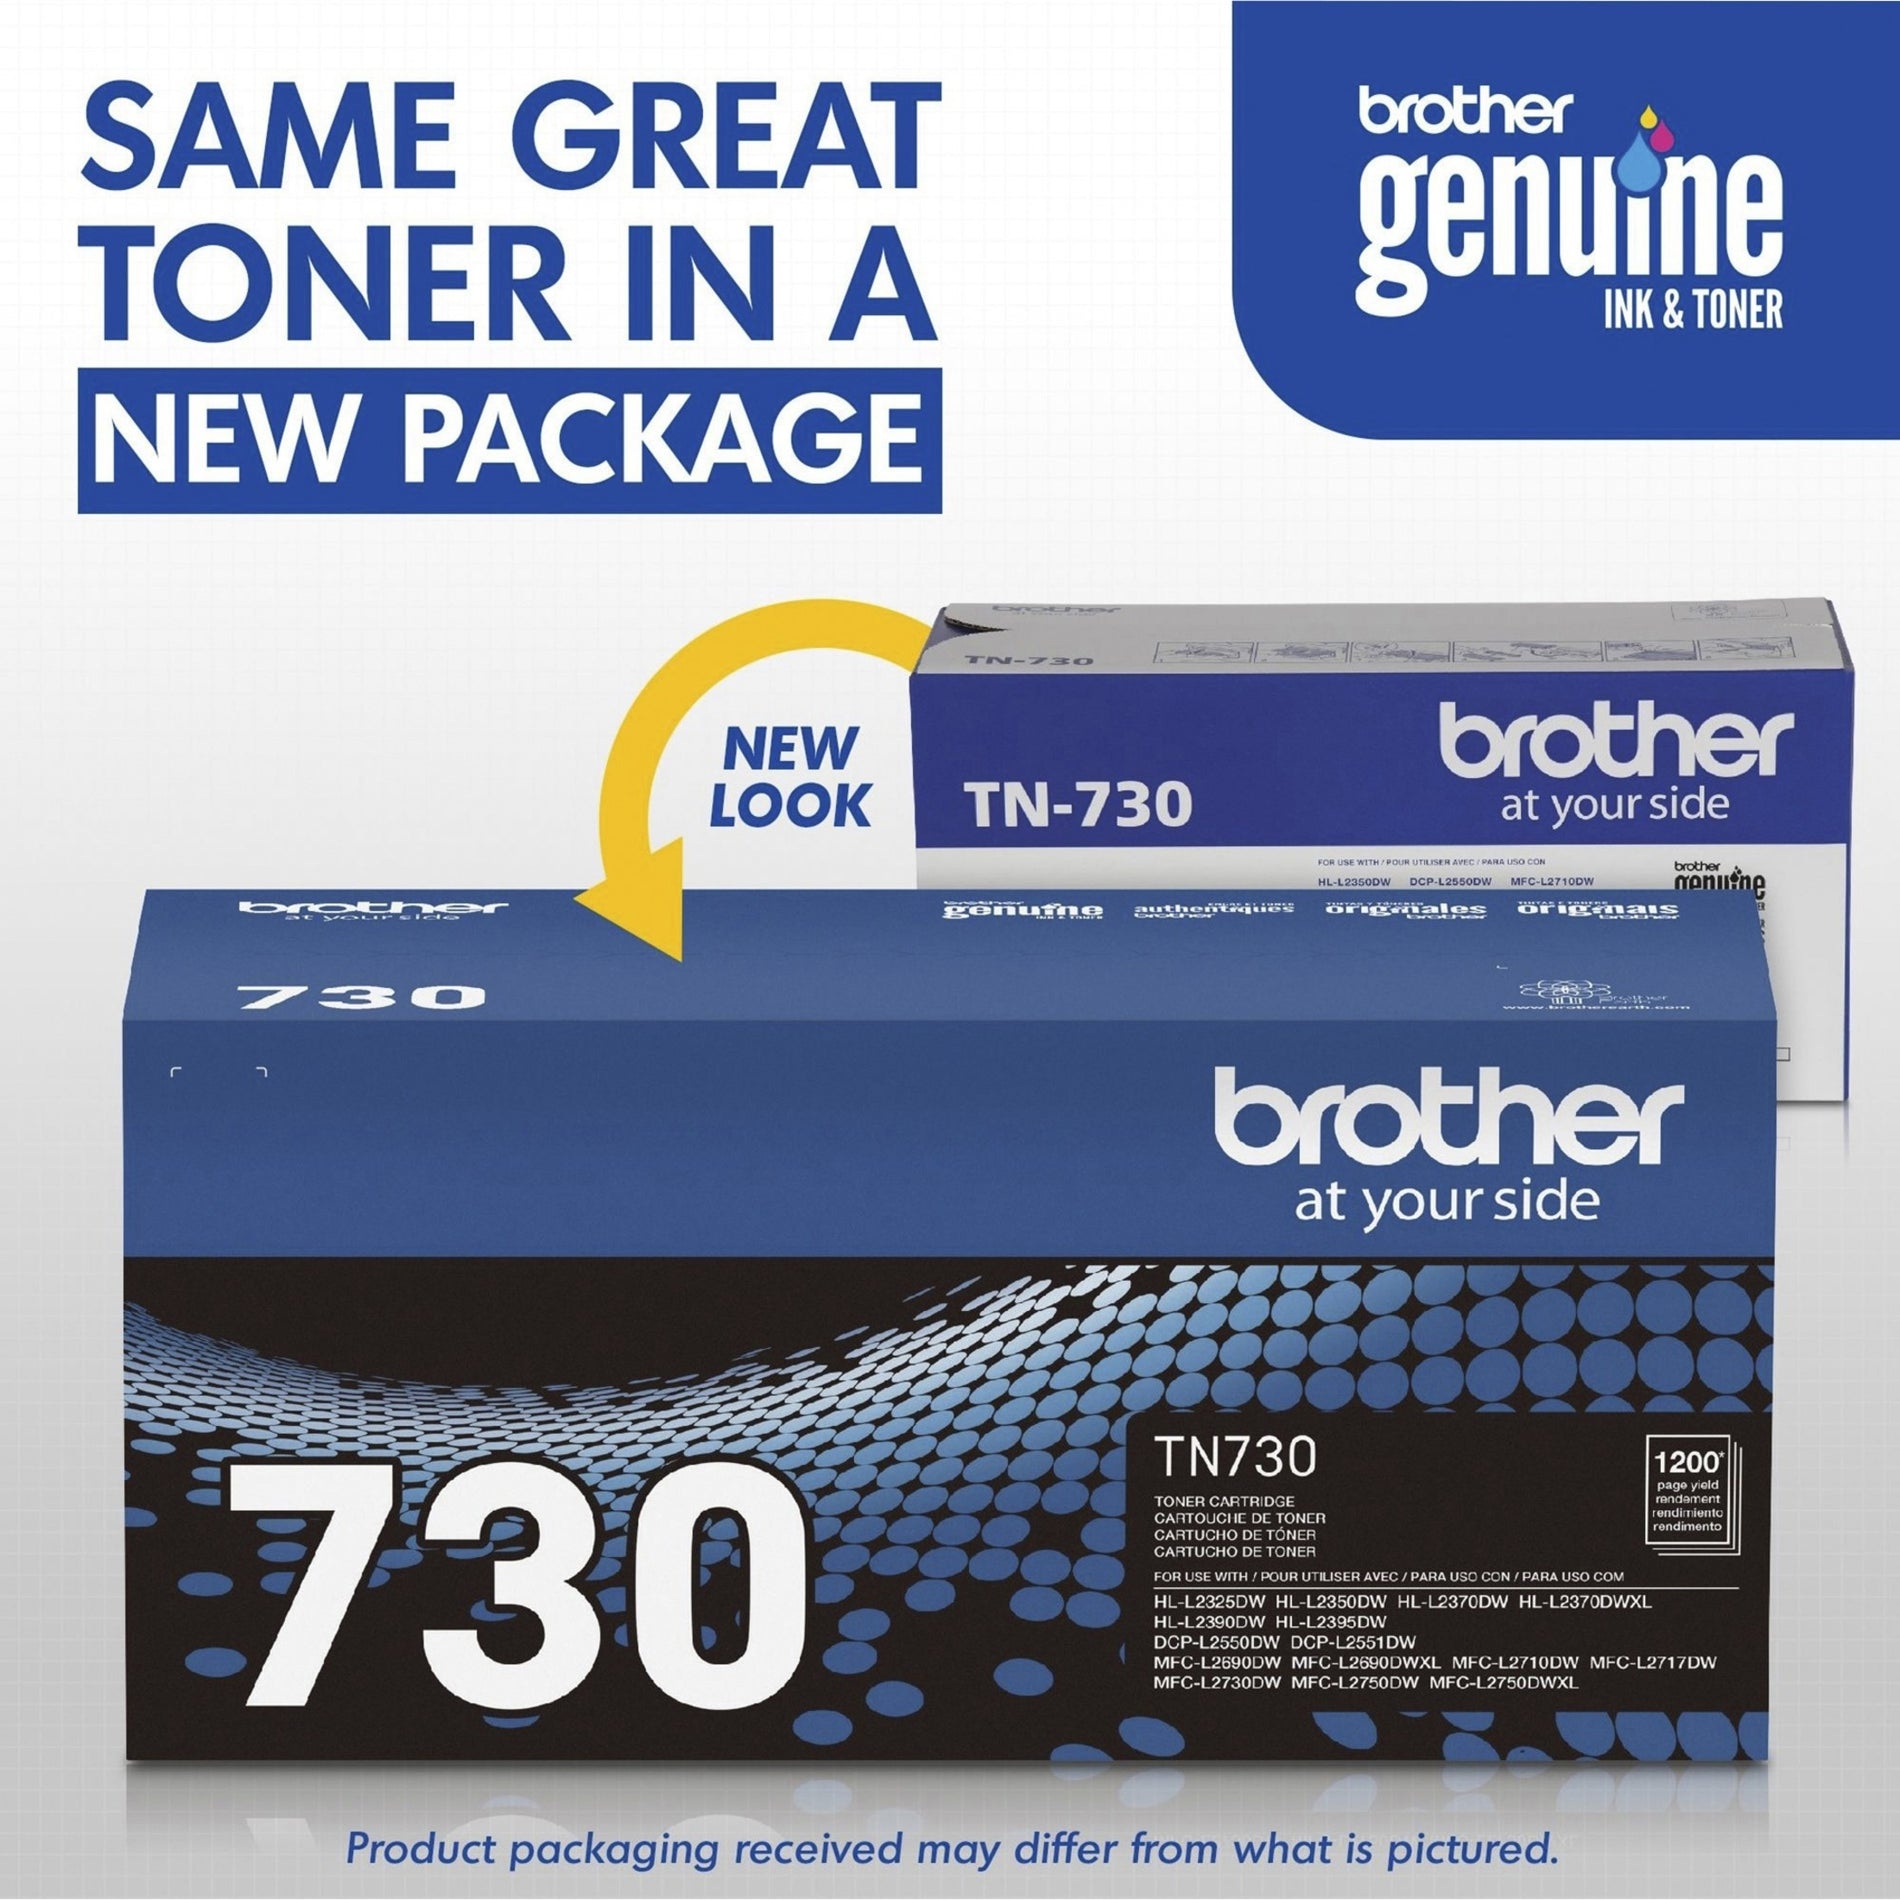 Brother TN-730 Toner Cartridge, 1200 Page Yield, Black